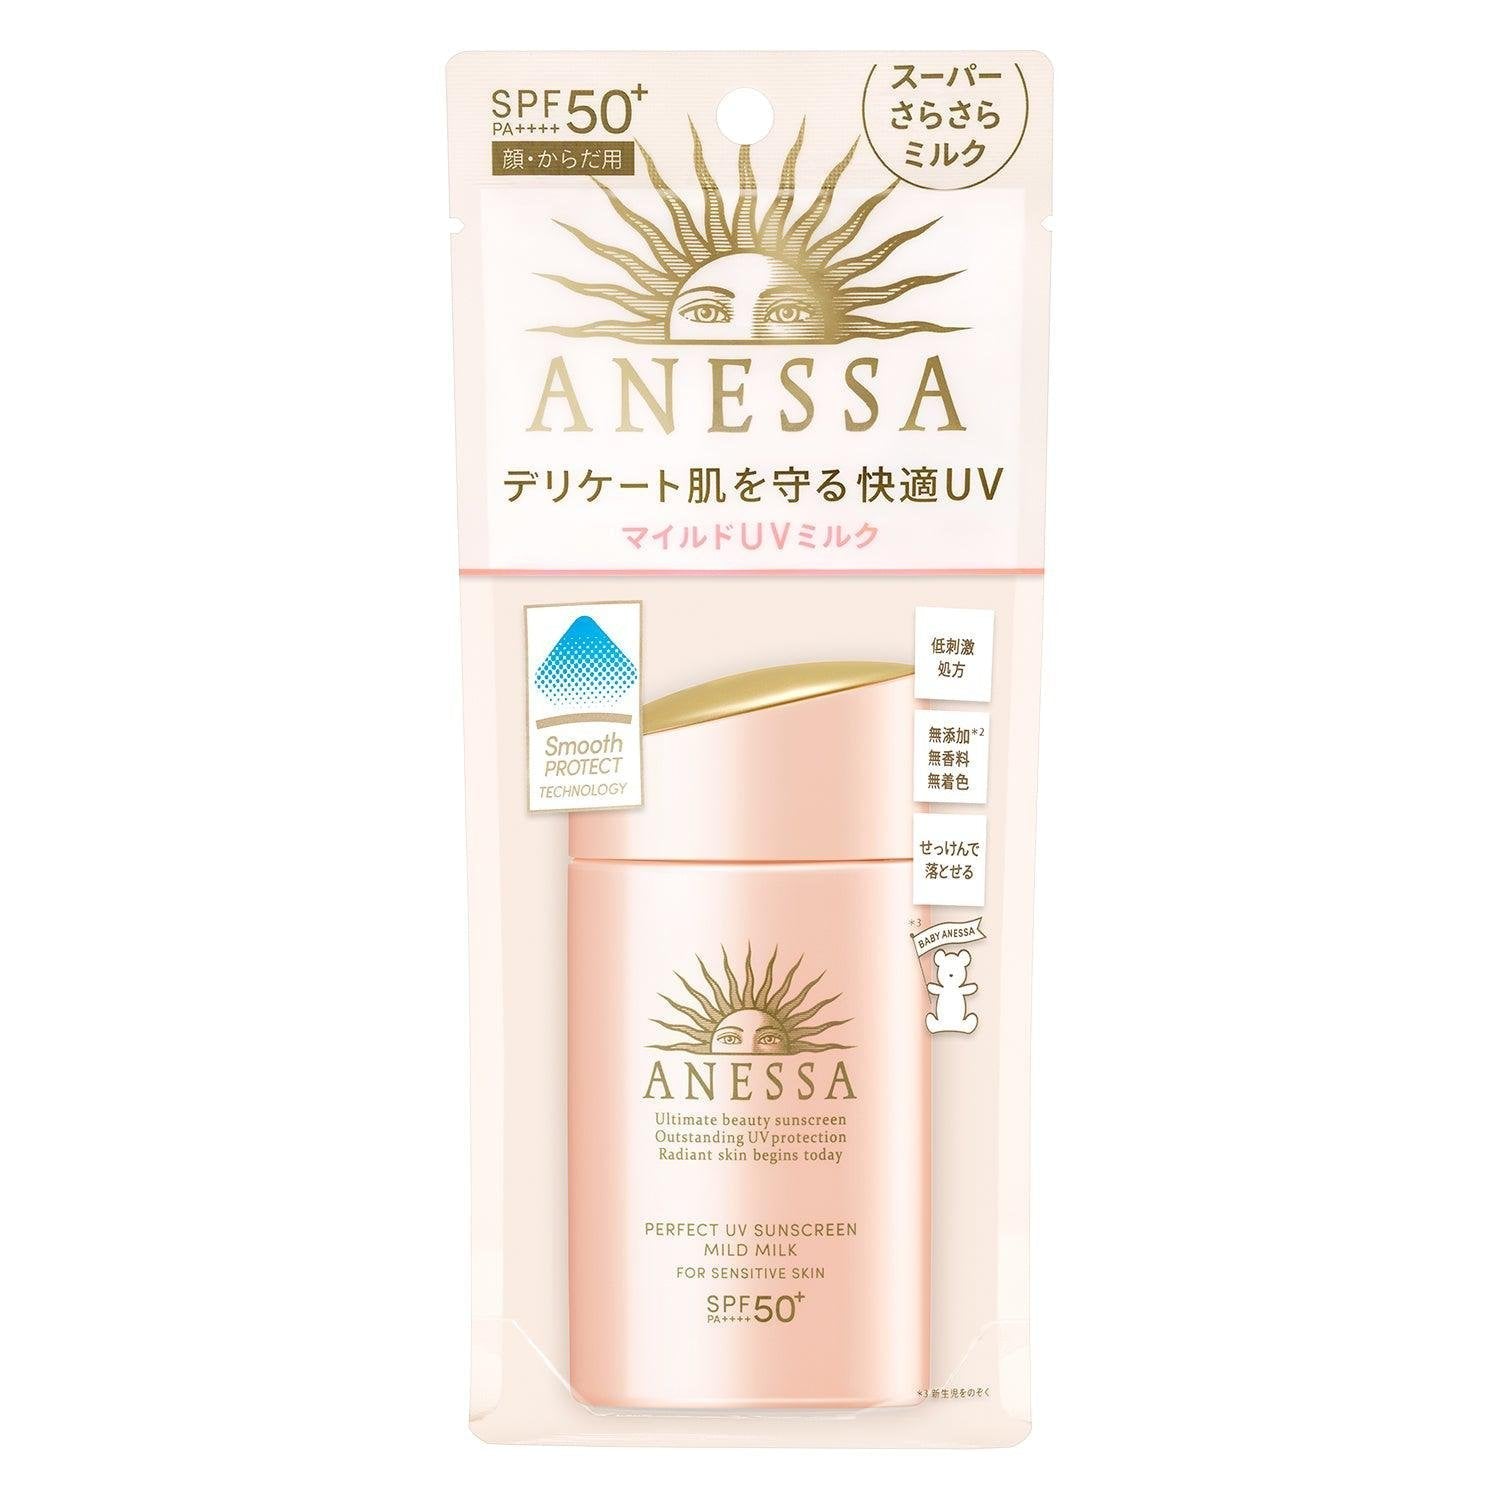 Shiseido Anessa Perfect UV Sunscreen Mild Milk SPF50+ 60ml